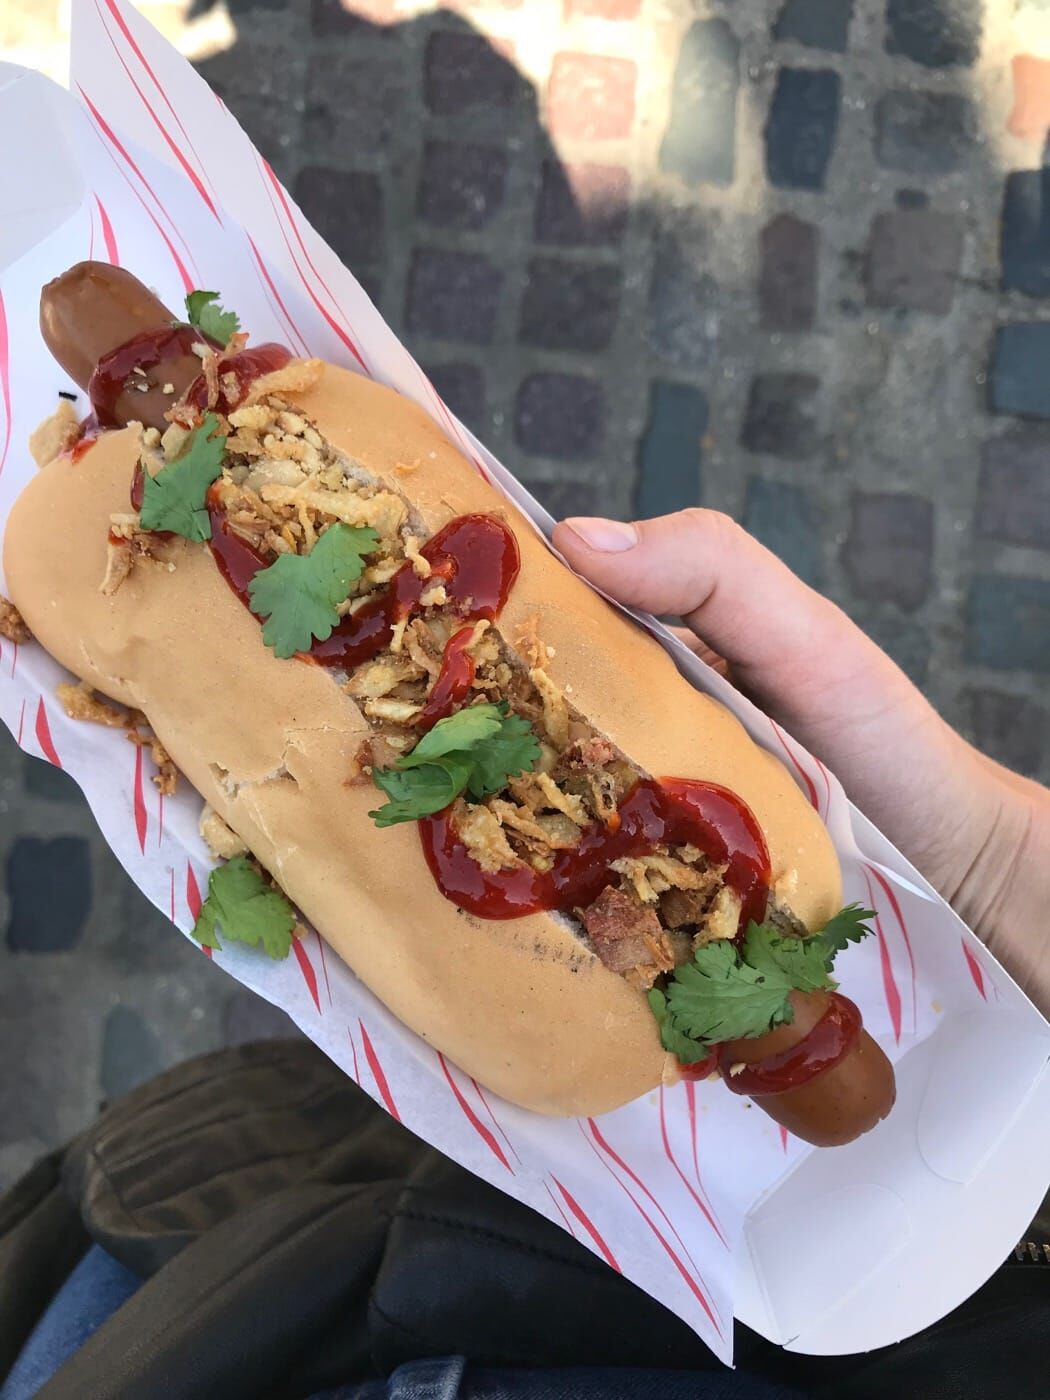 The Good Dog - Best Vegan Food in London